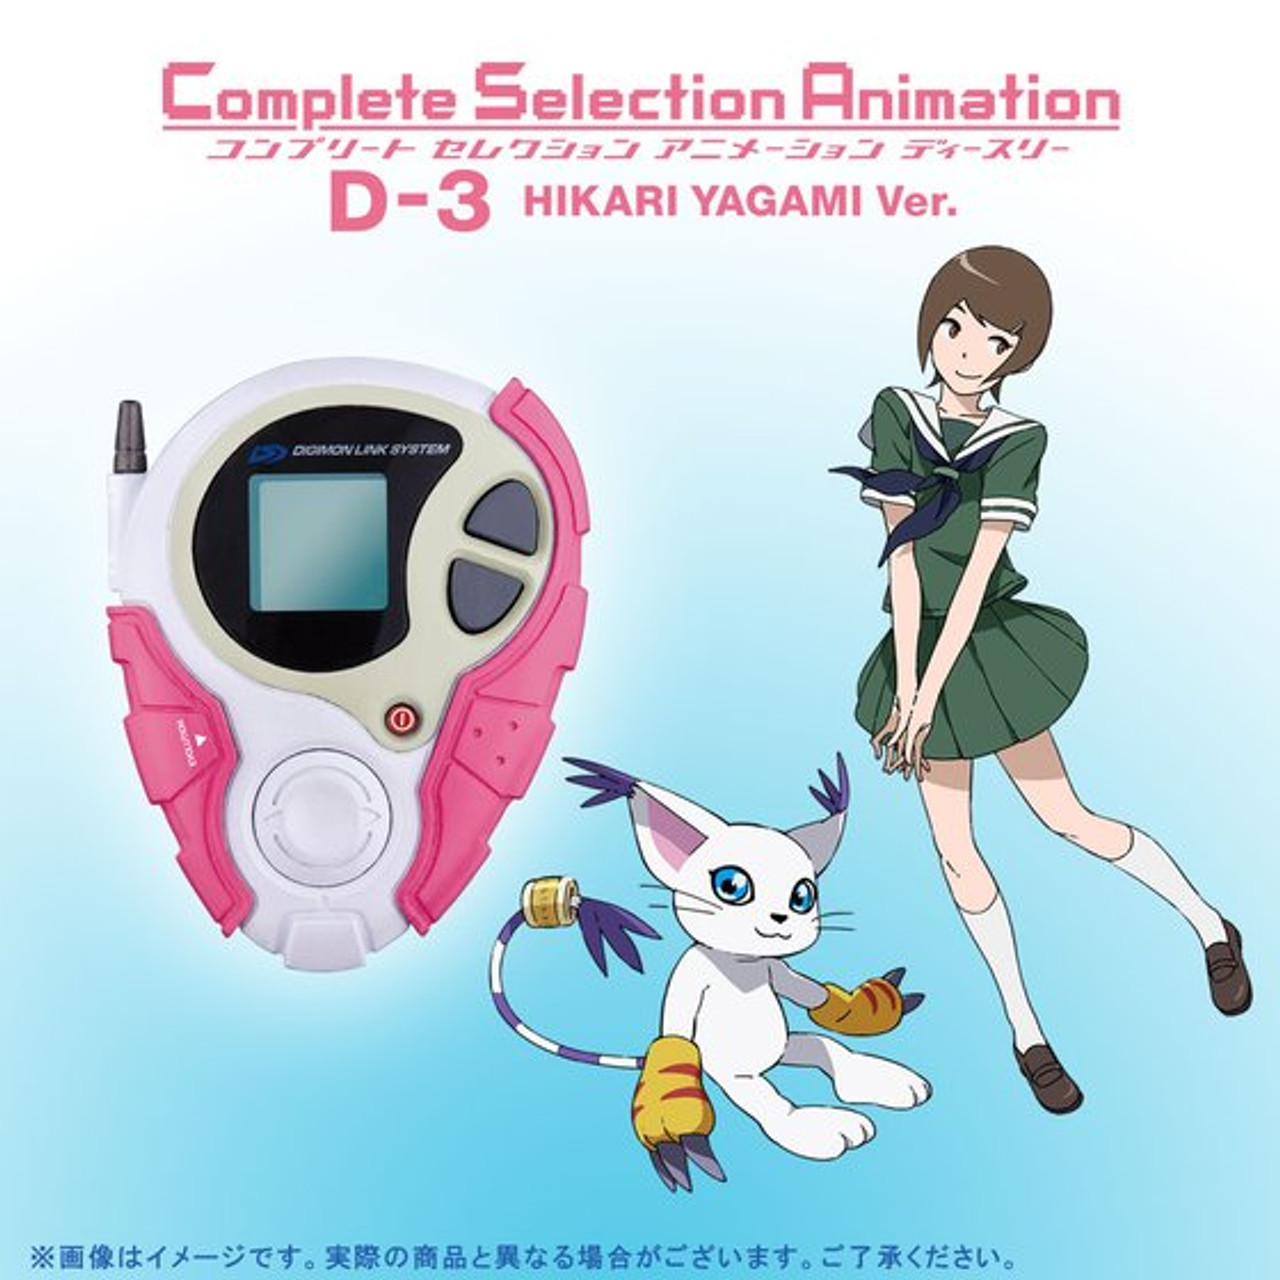 Digimon adventure tri ED AiM - Keep On ~tri ver.~ @bluecttncndy  Digimon  adventure tri, Digimon adventure, Digimon digital monsters